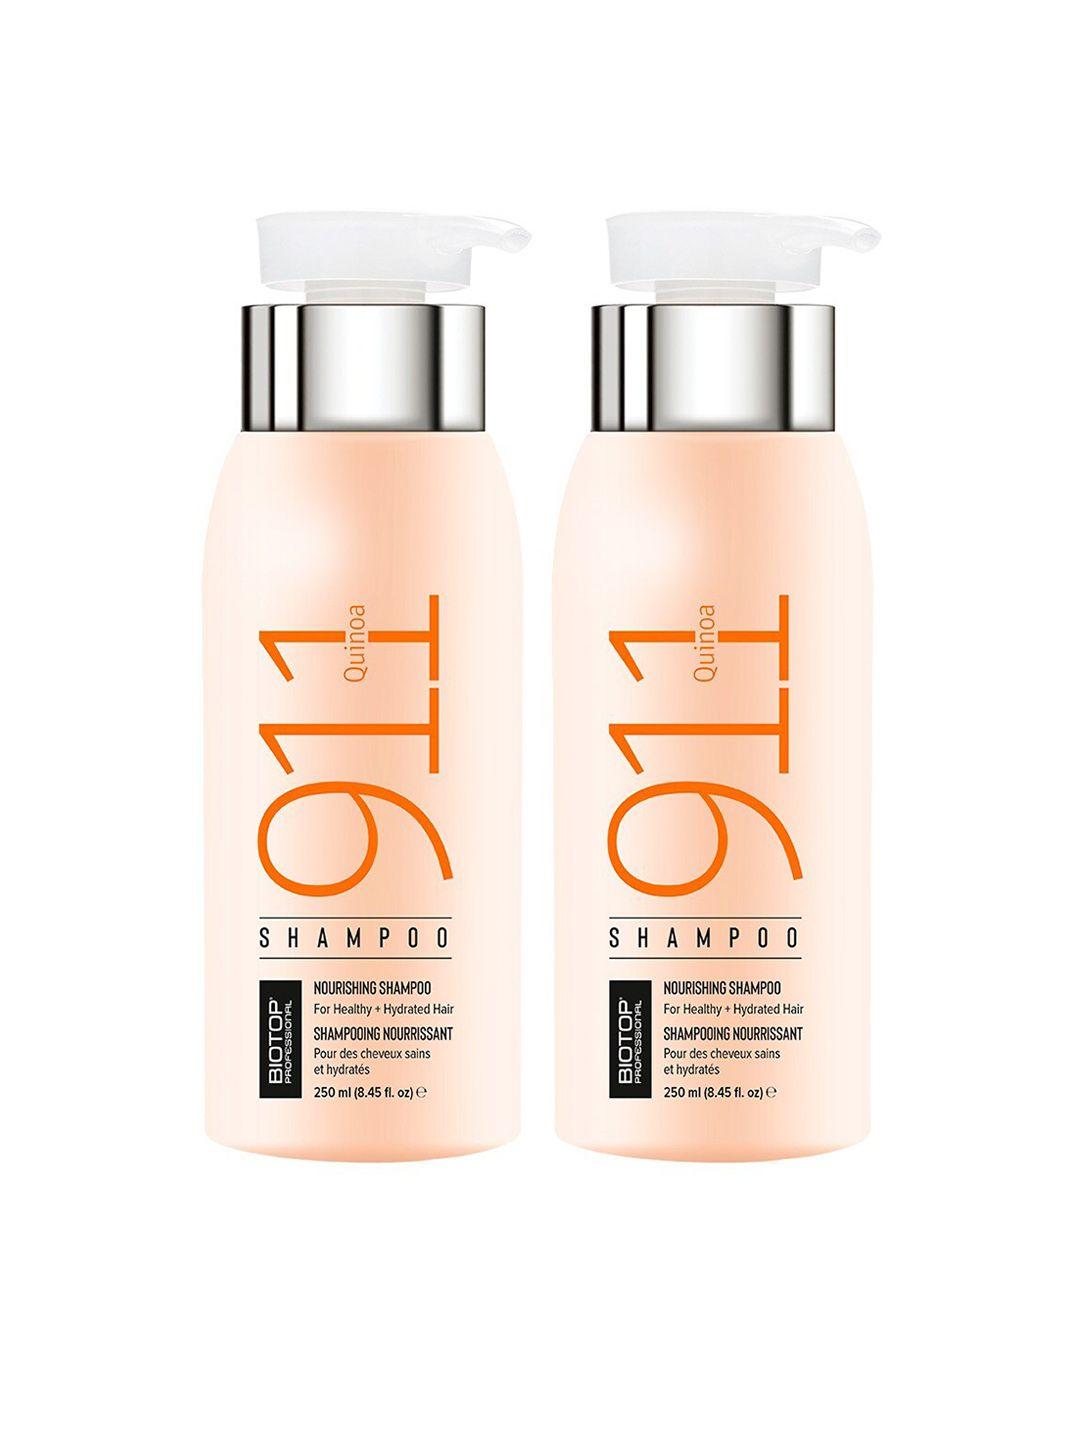 biotop professional set of 2 911 quinoa shampoo - 250ml each